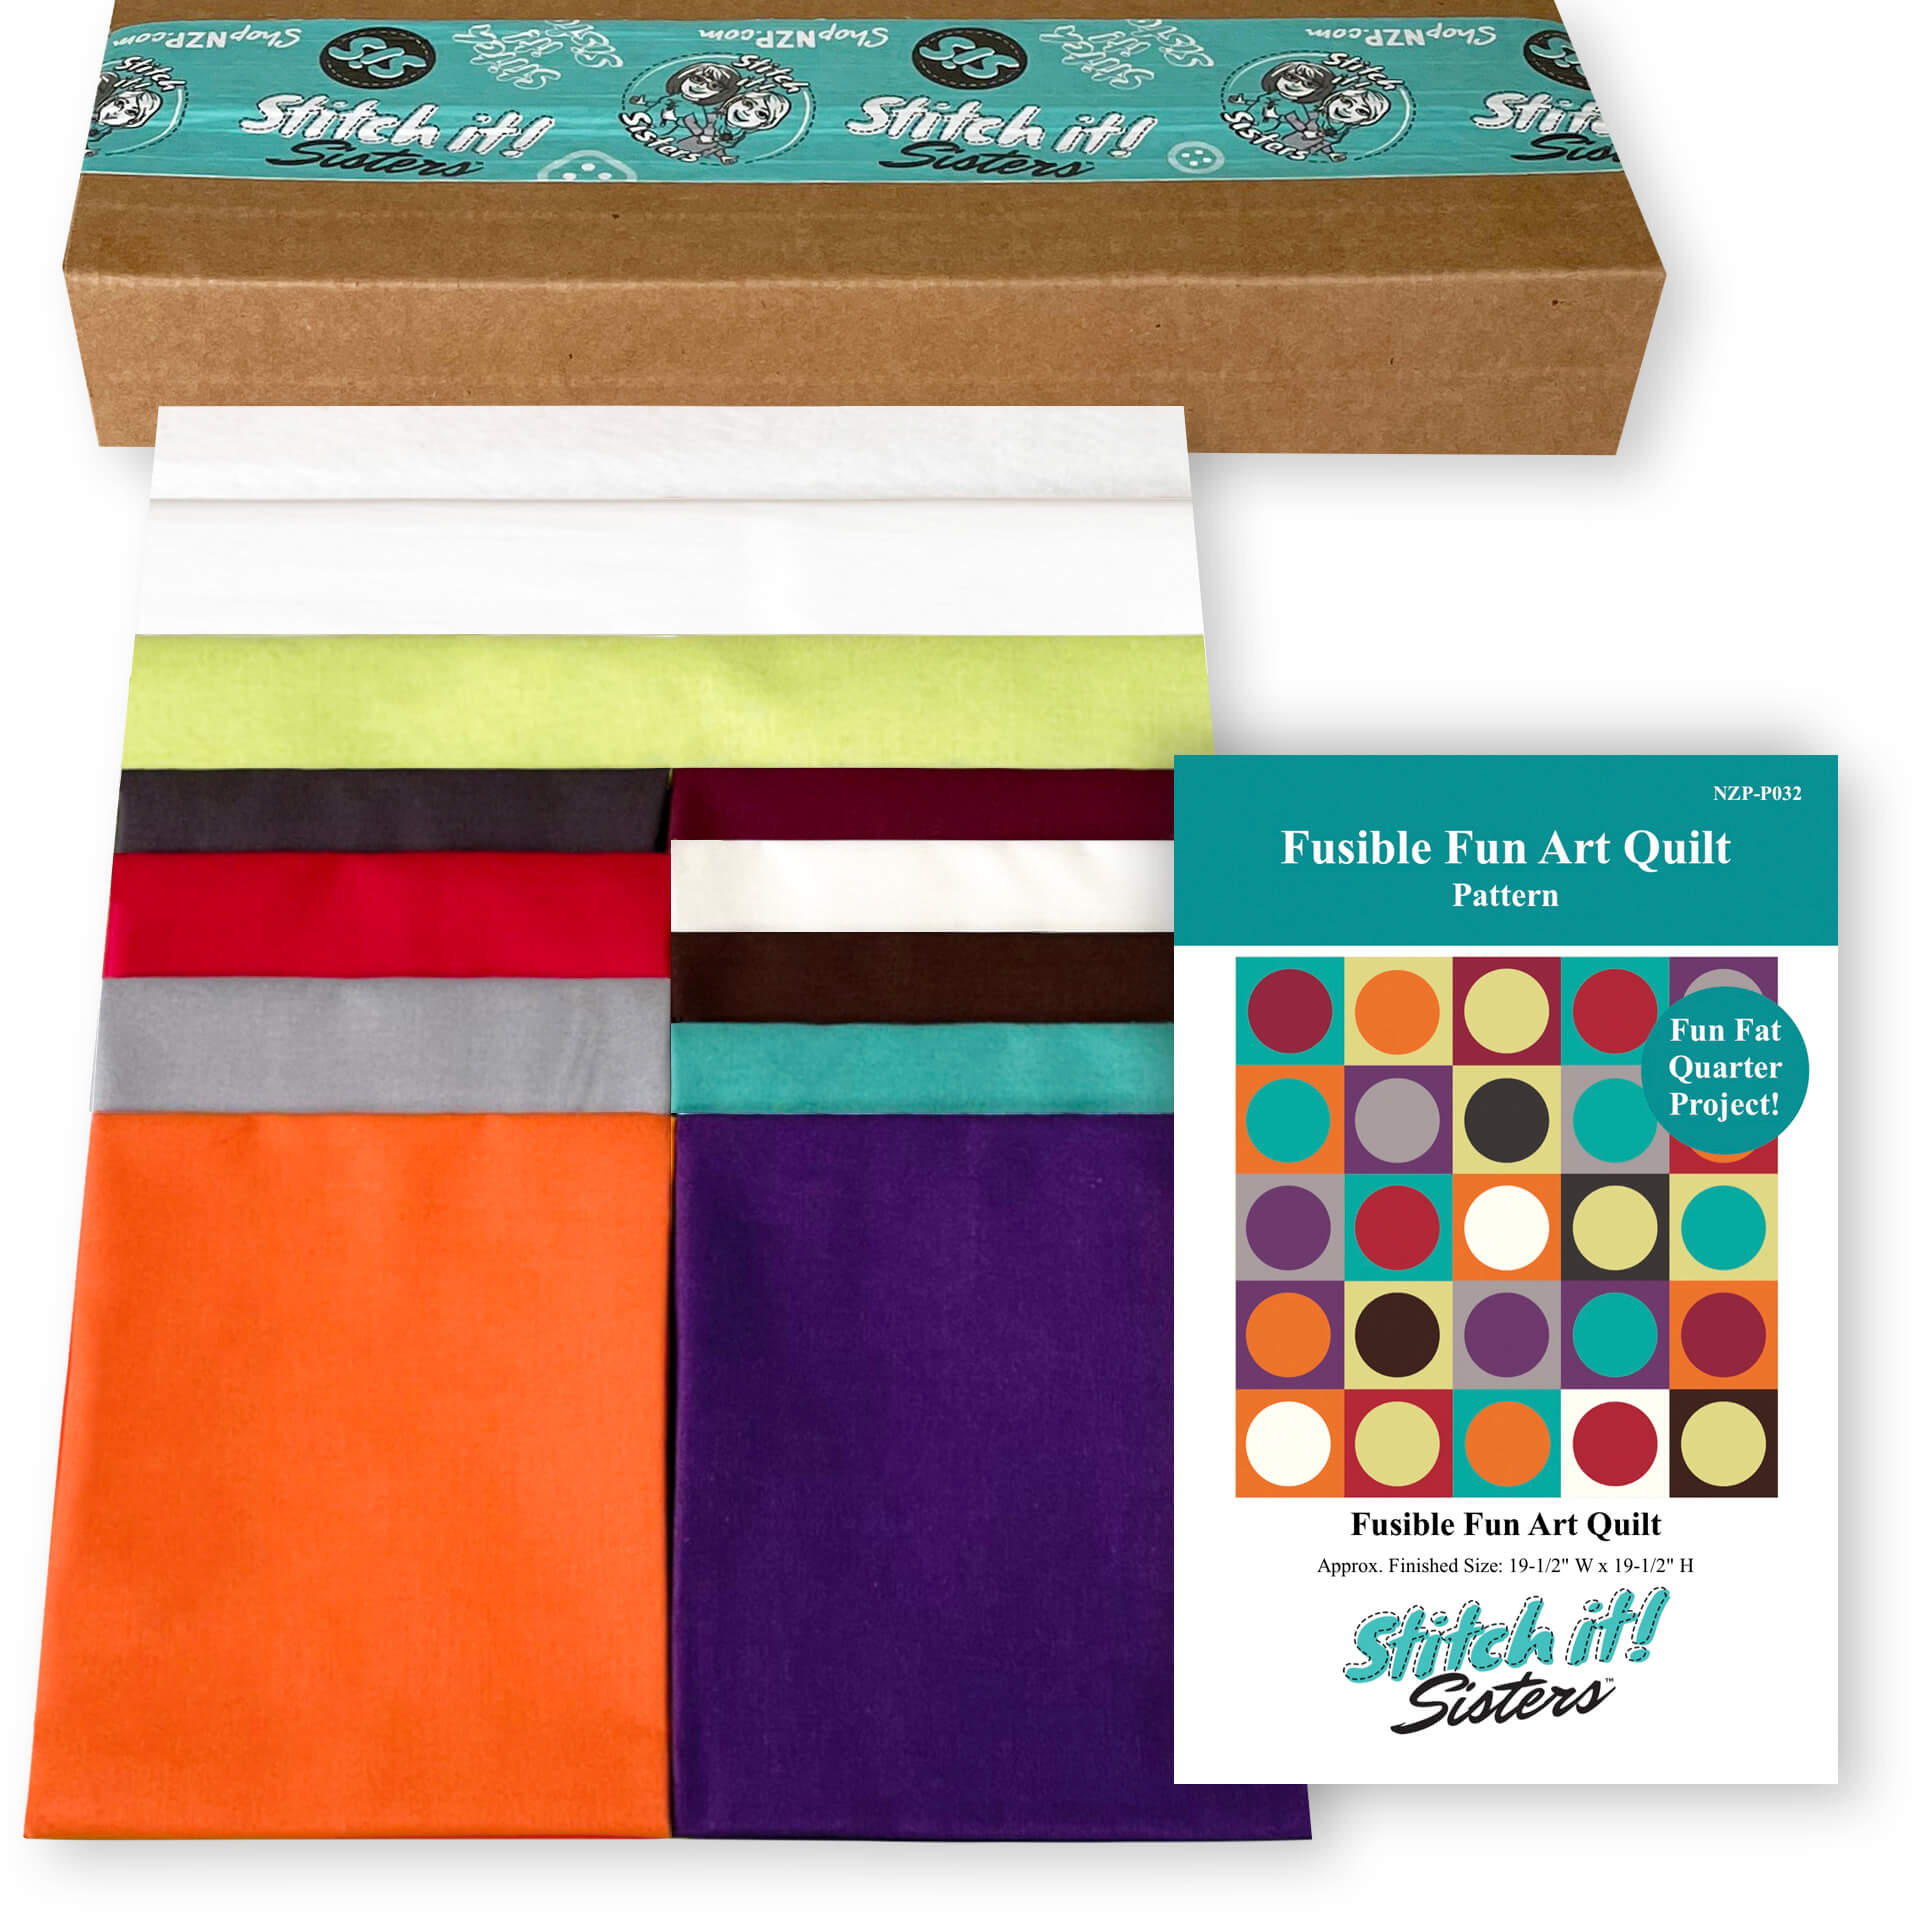 Fusible Fun Art Quilt Bundle Box Available at Nancy Zieman Productions at ShopNZP.com